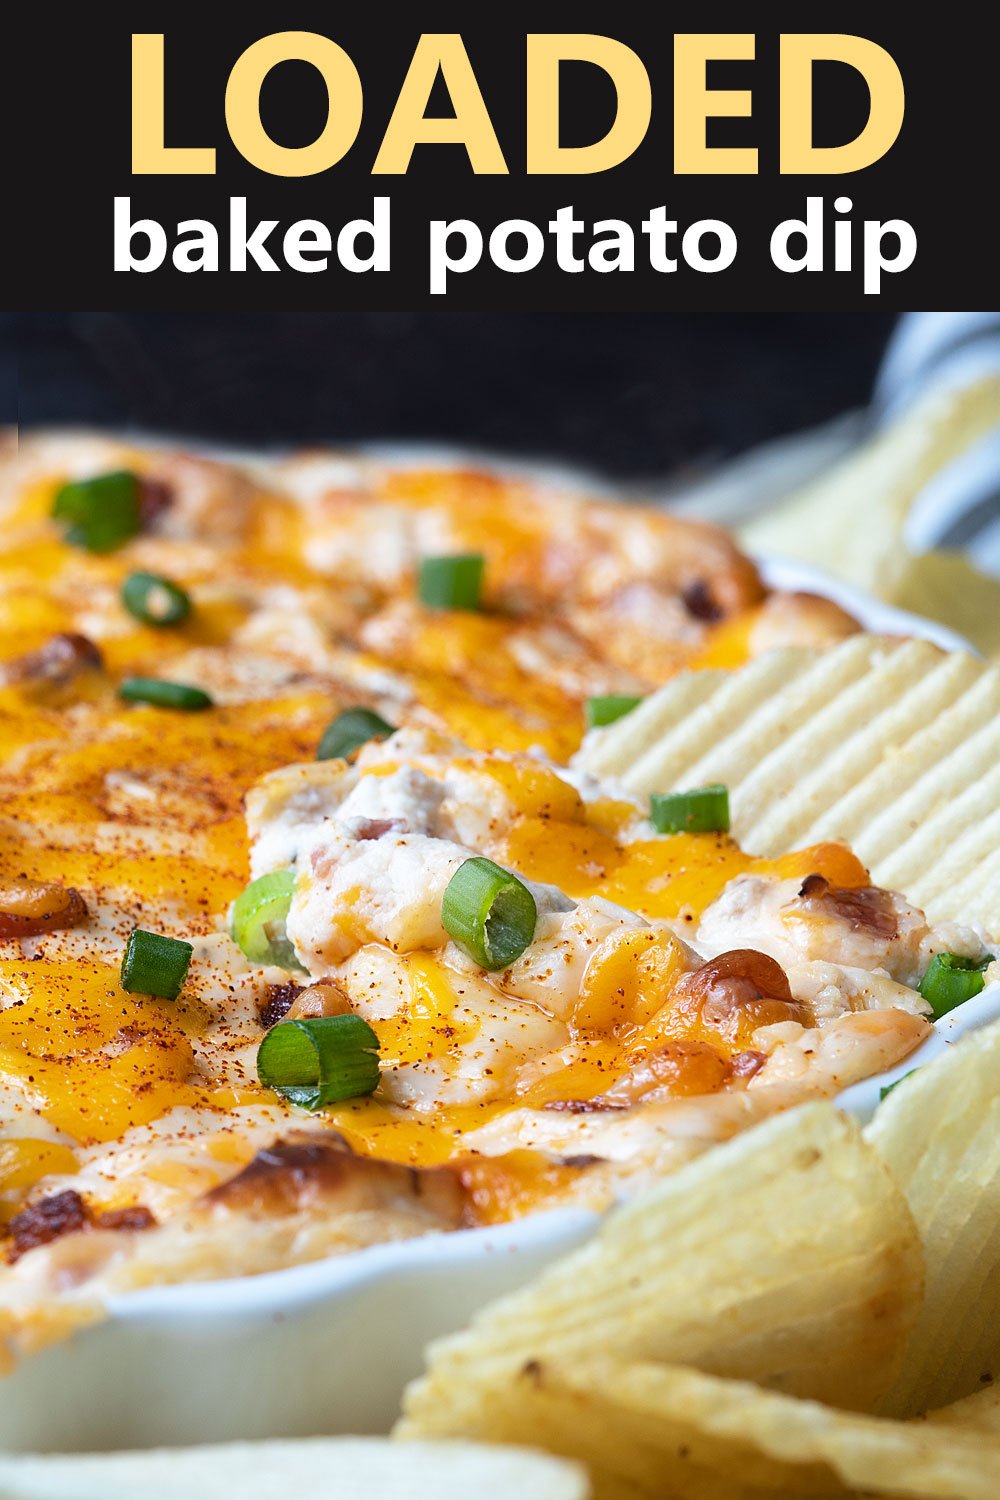 Loaded baked potato dip spread on a potato chip.